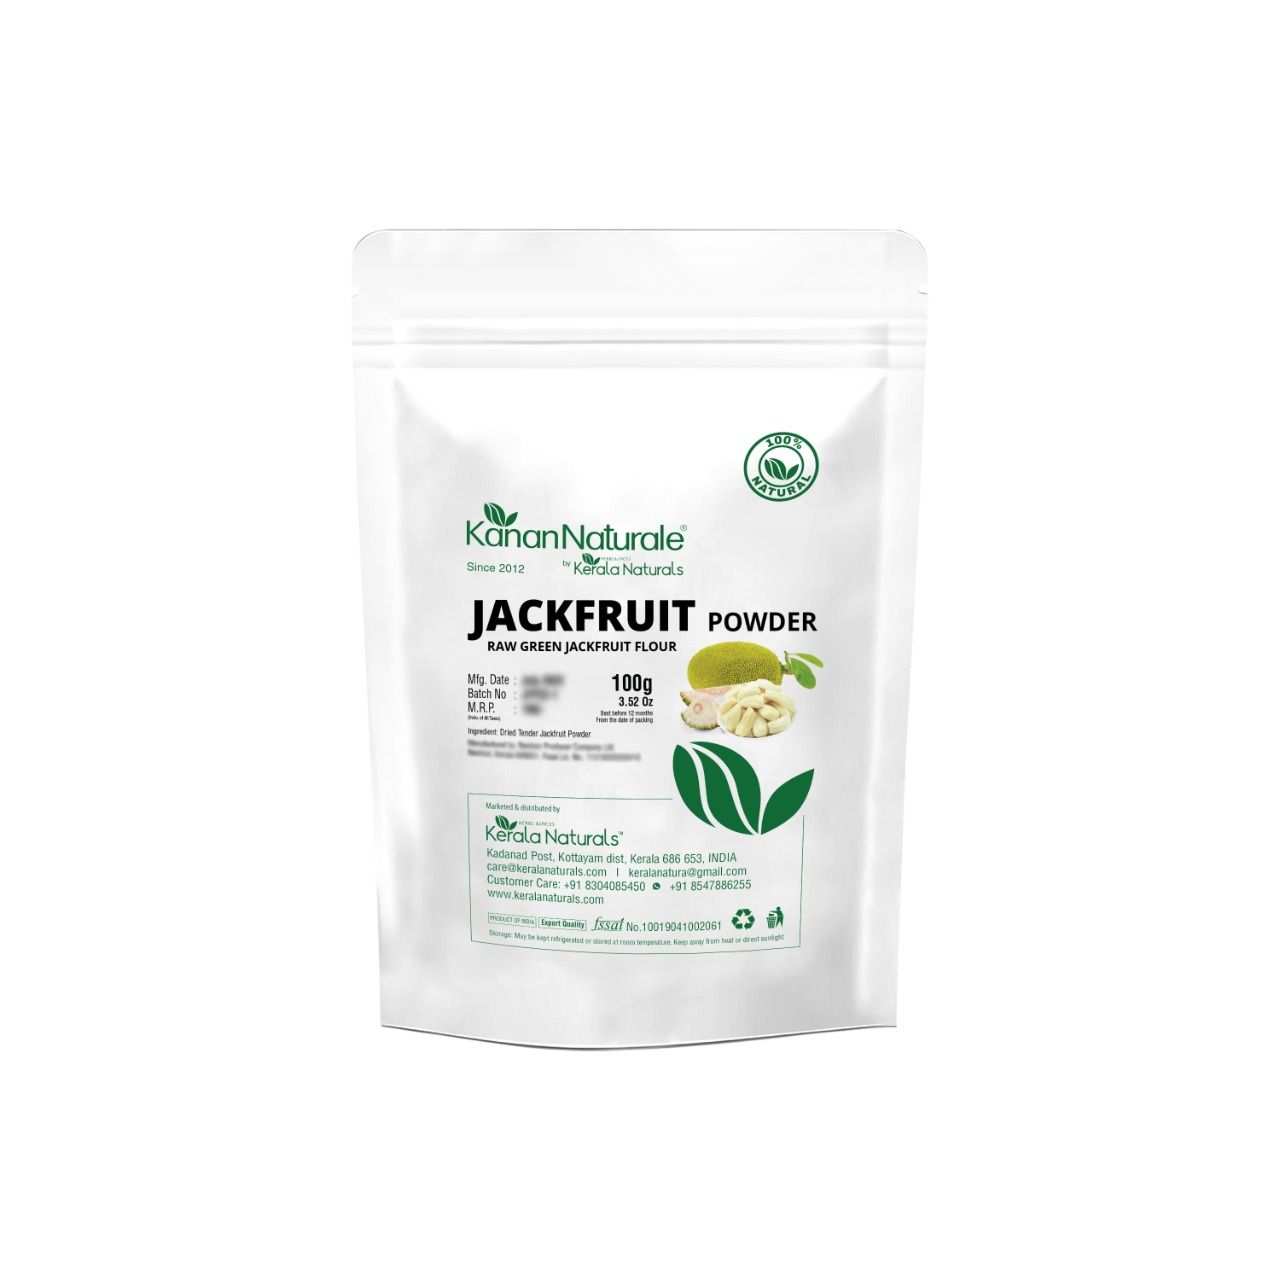 Buy Kanan Naturale Jackfruit Powder / Raw Green Jackfruit Flour at Best Price Online